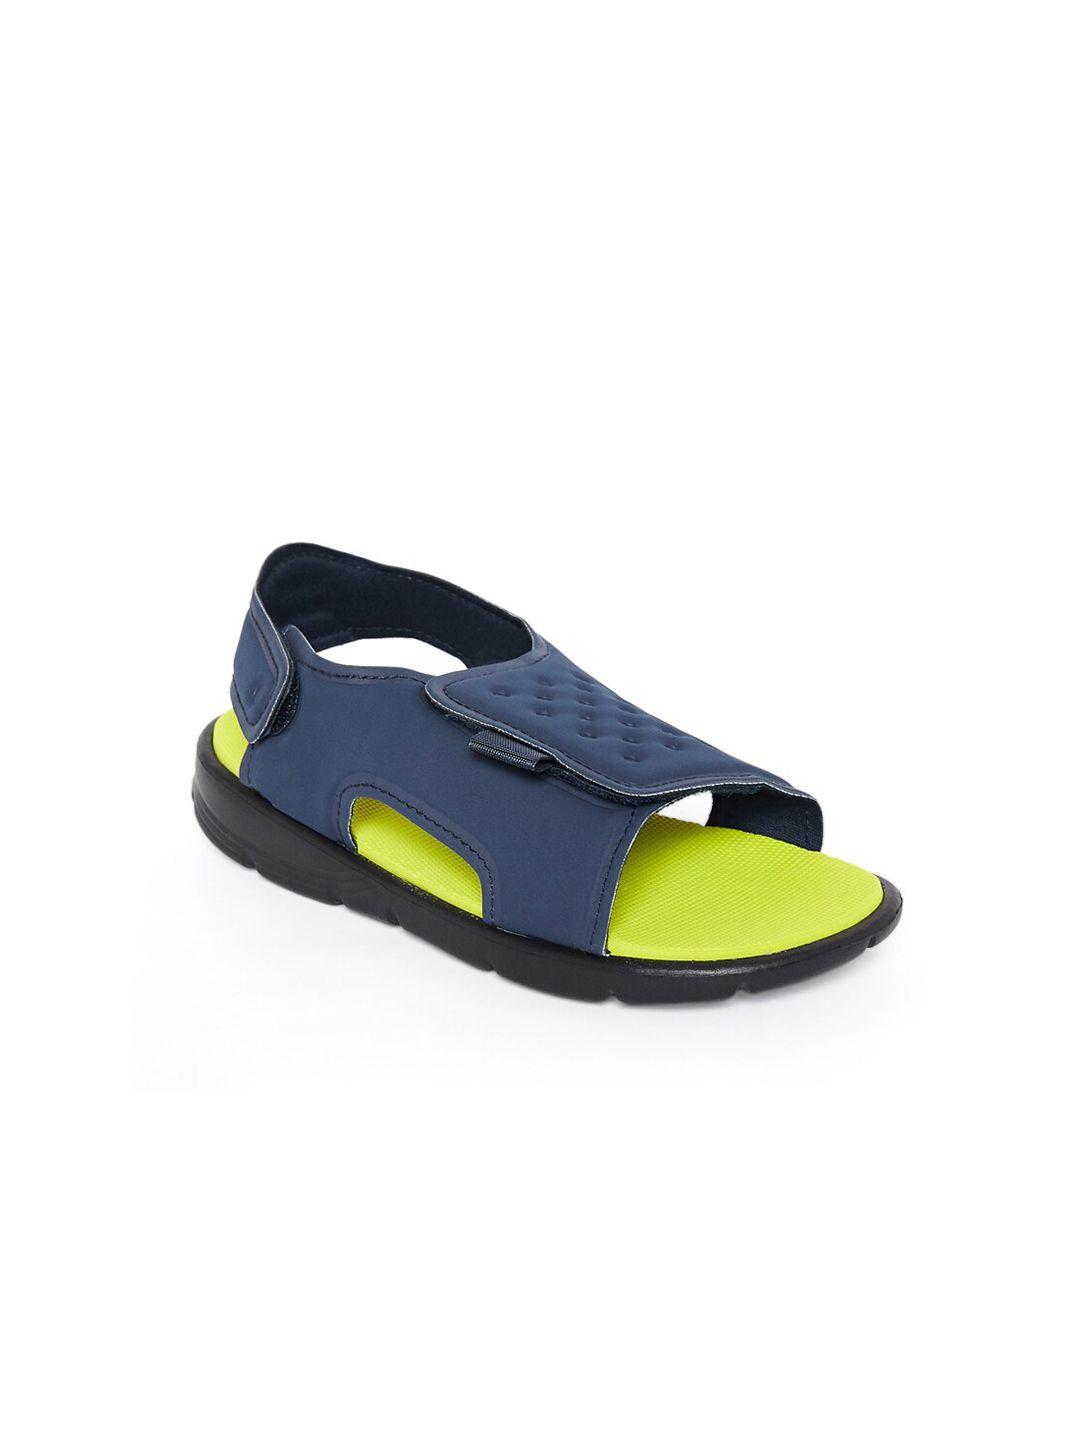 pantaloons junior boys navy blue & lime green canvas comfort sandals